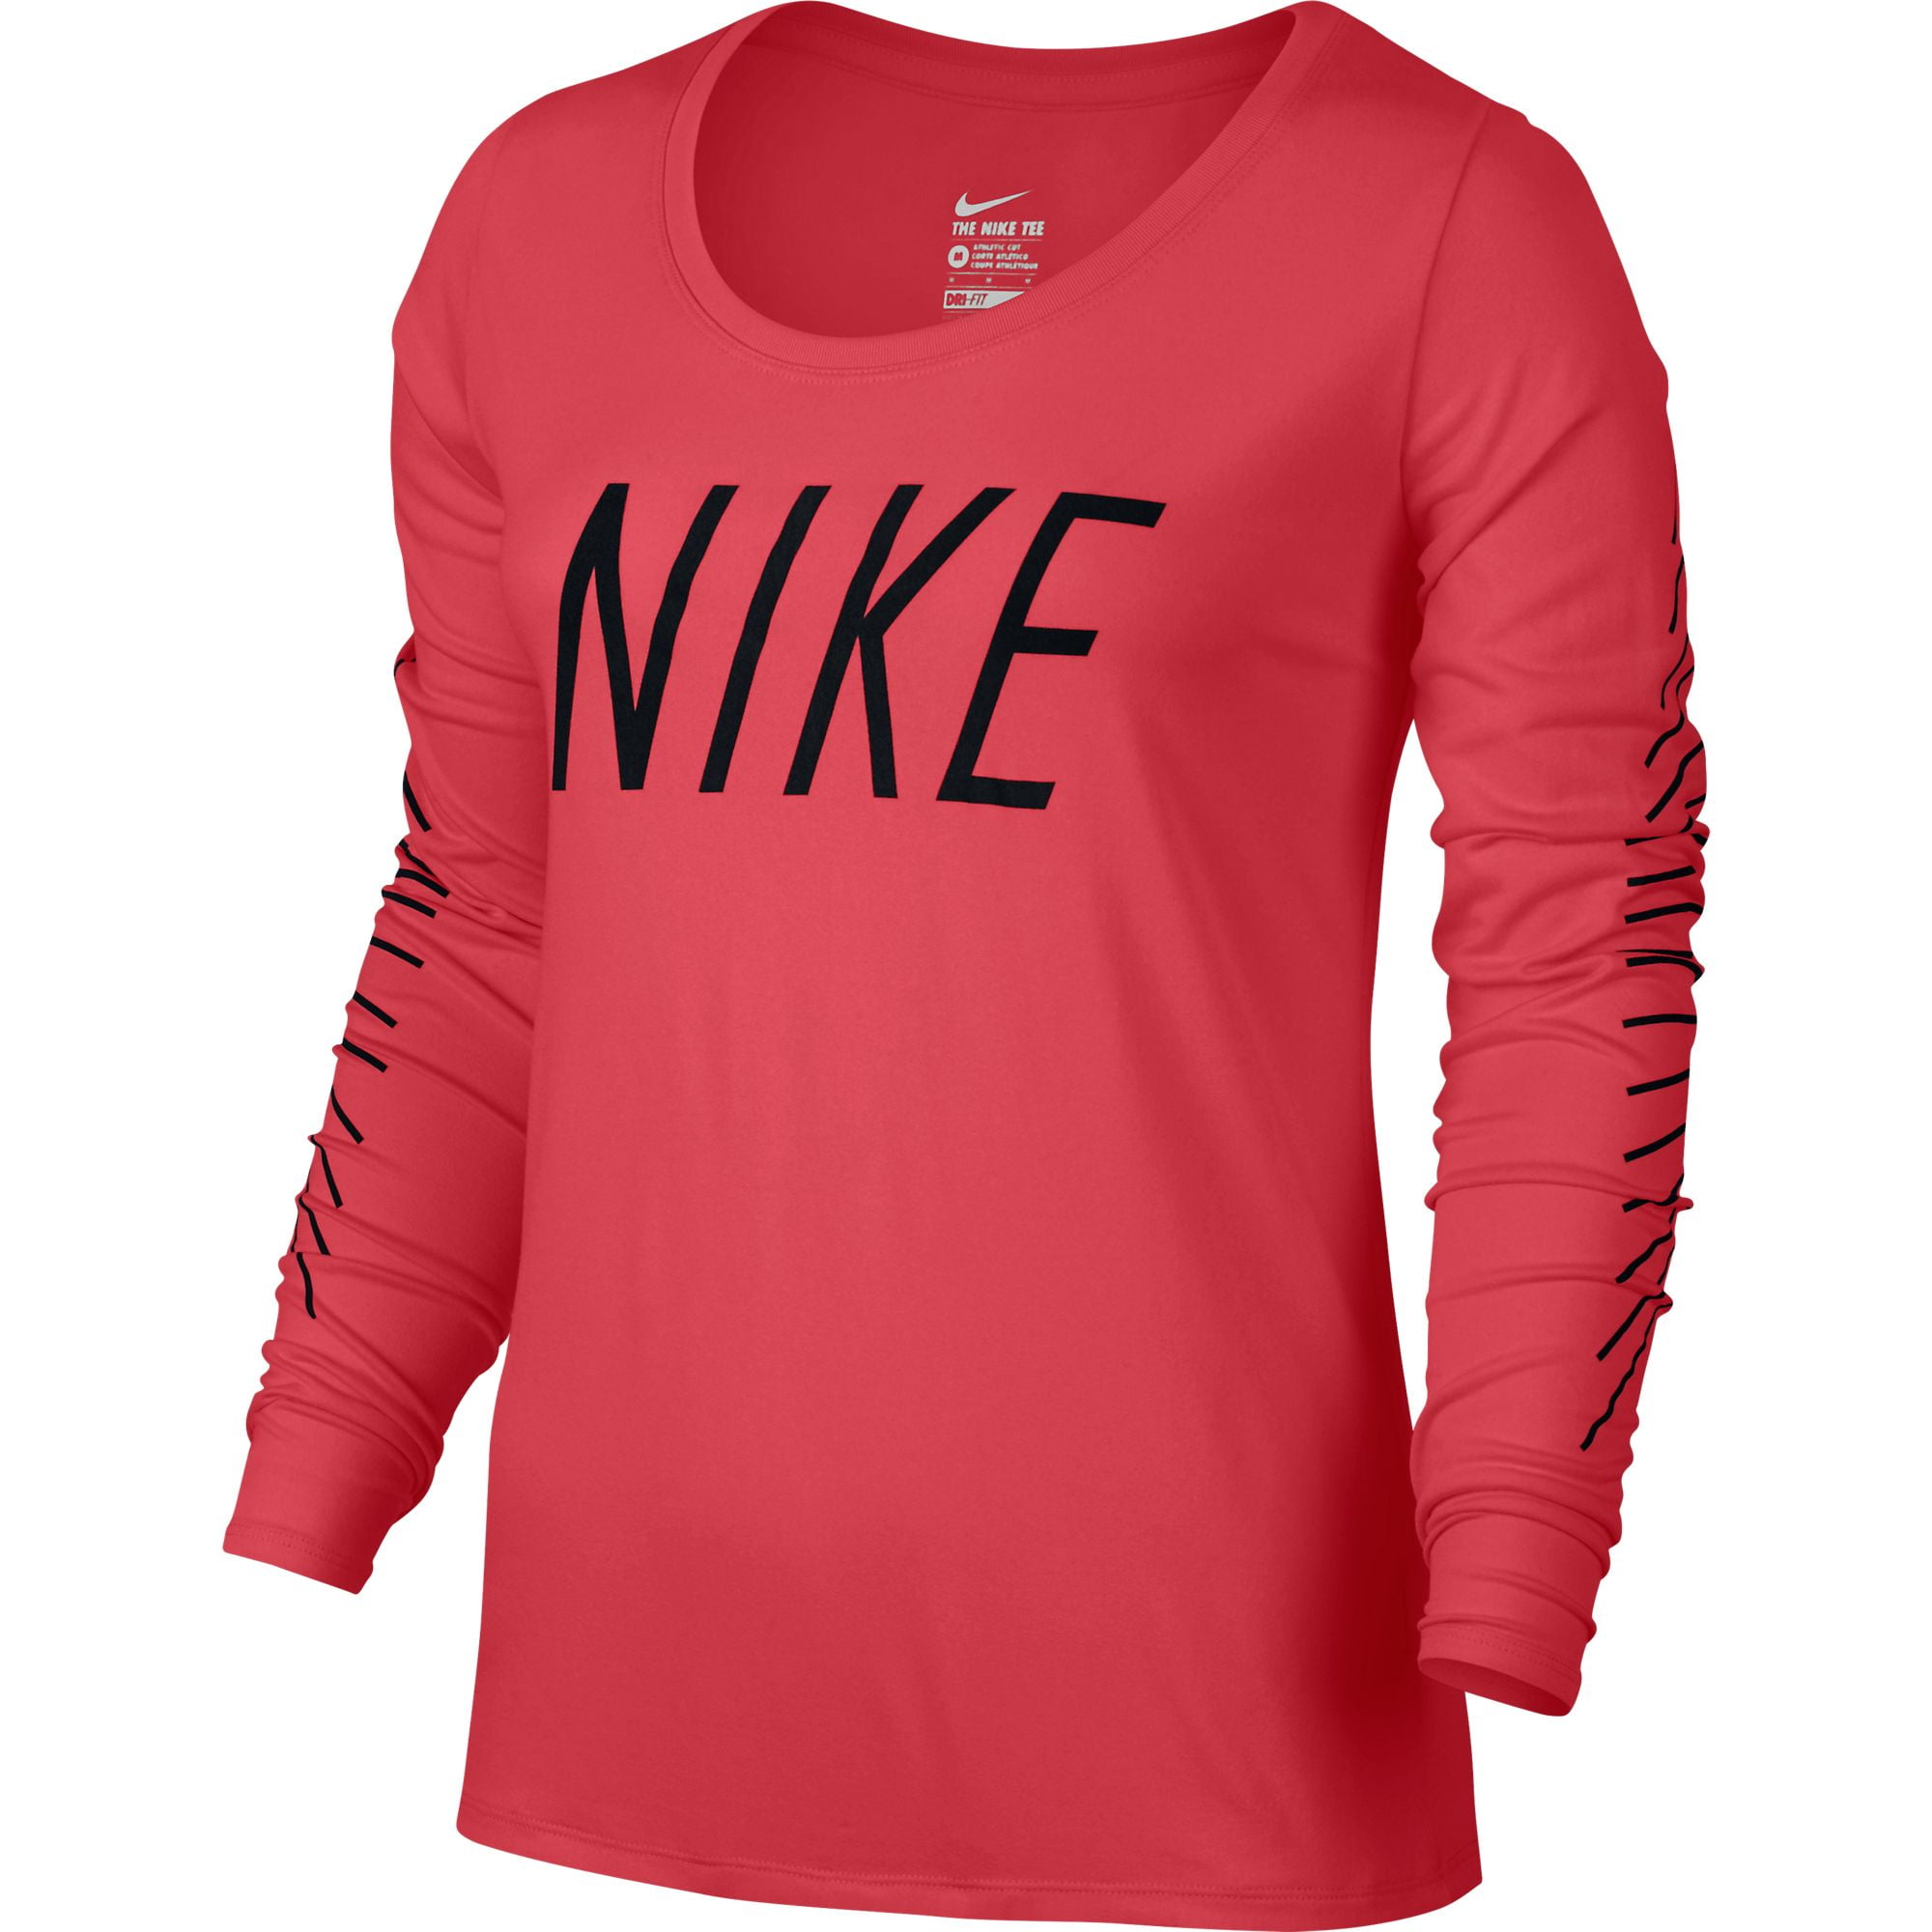 Nike Women's Legend Long Sleeve T-Shirt Black/Red 805993-850 - Walmart.com